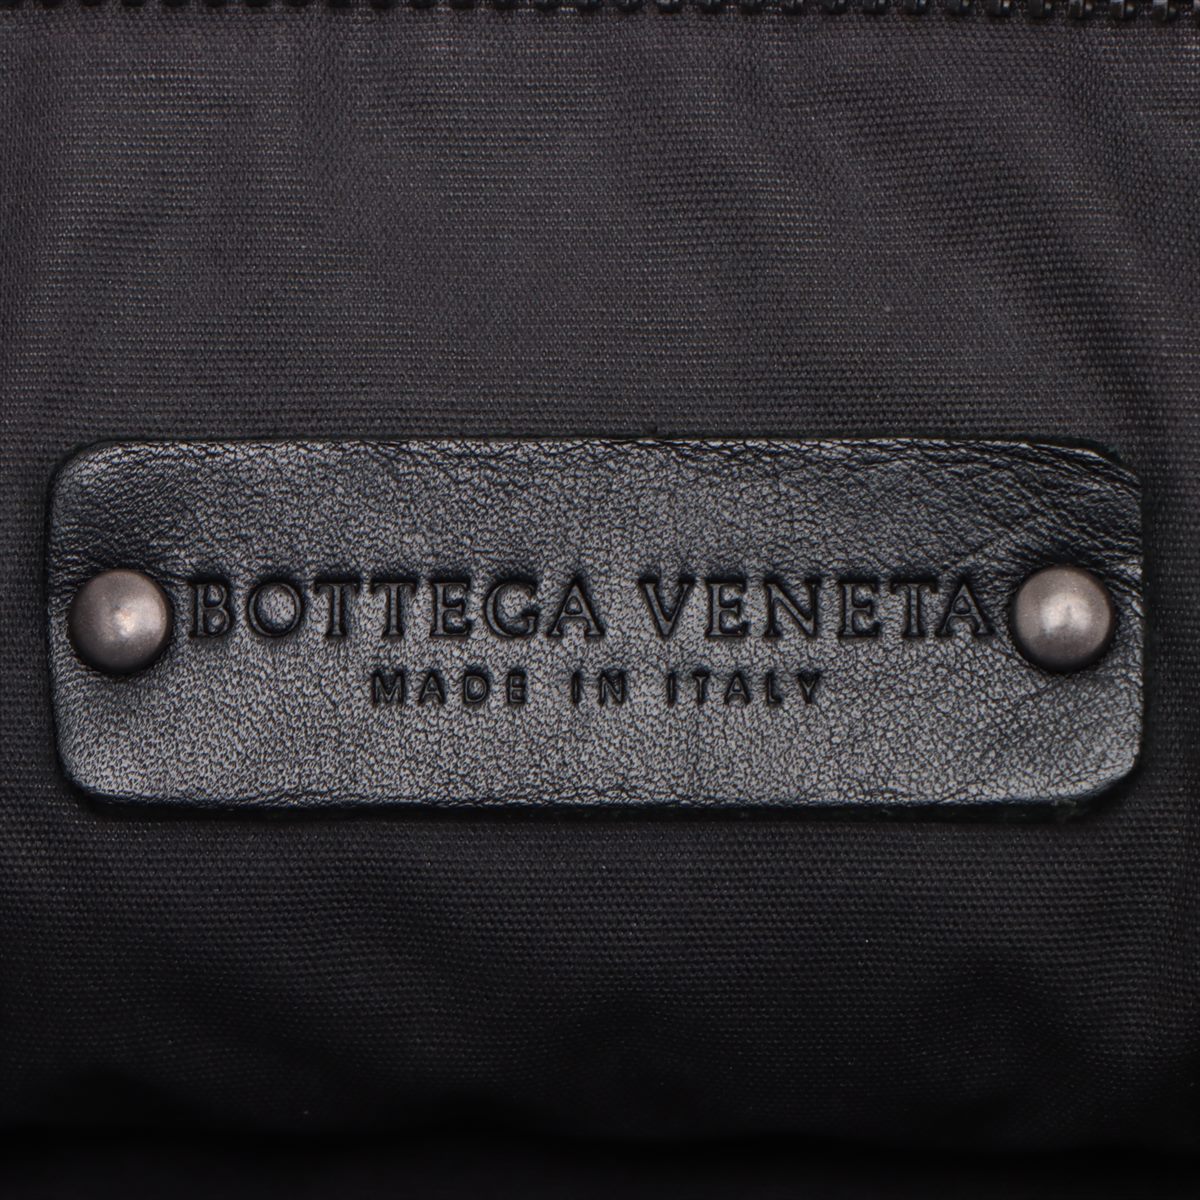 Bottega Veneta Intrecciato Leather Shoulder Bag Black